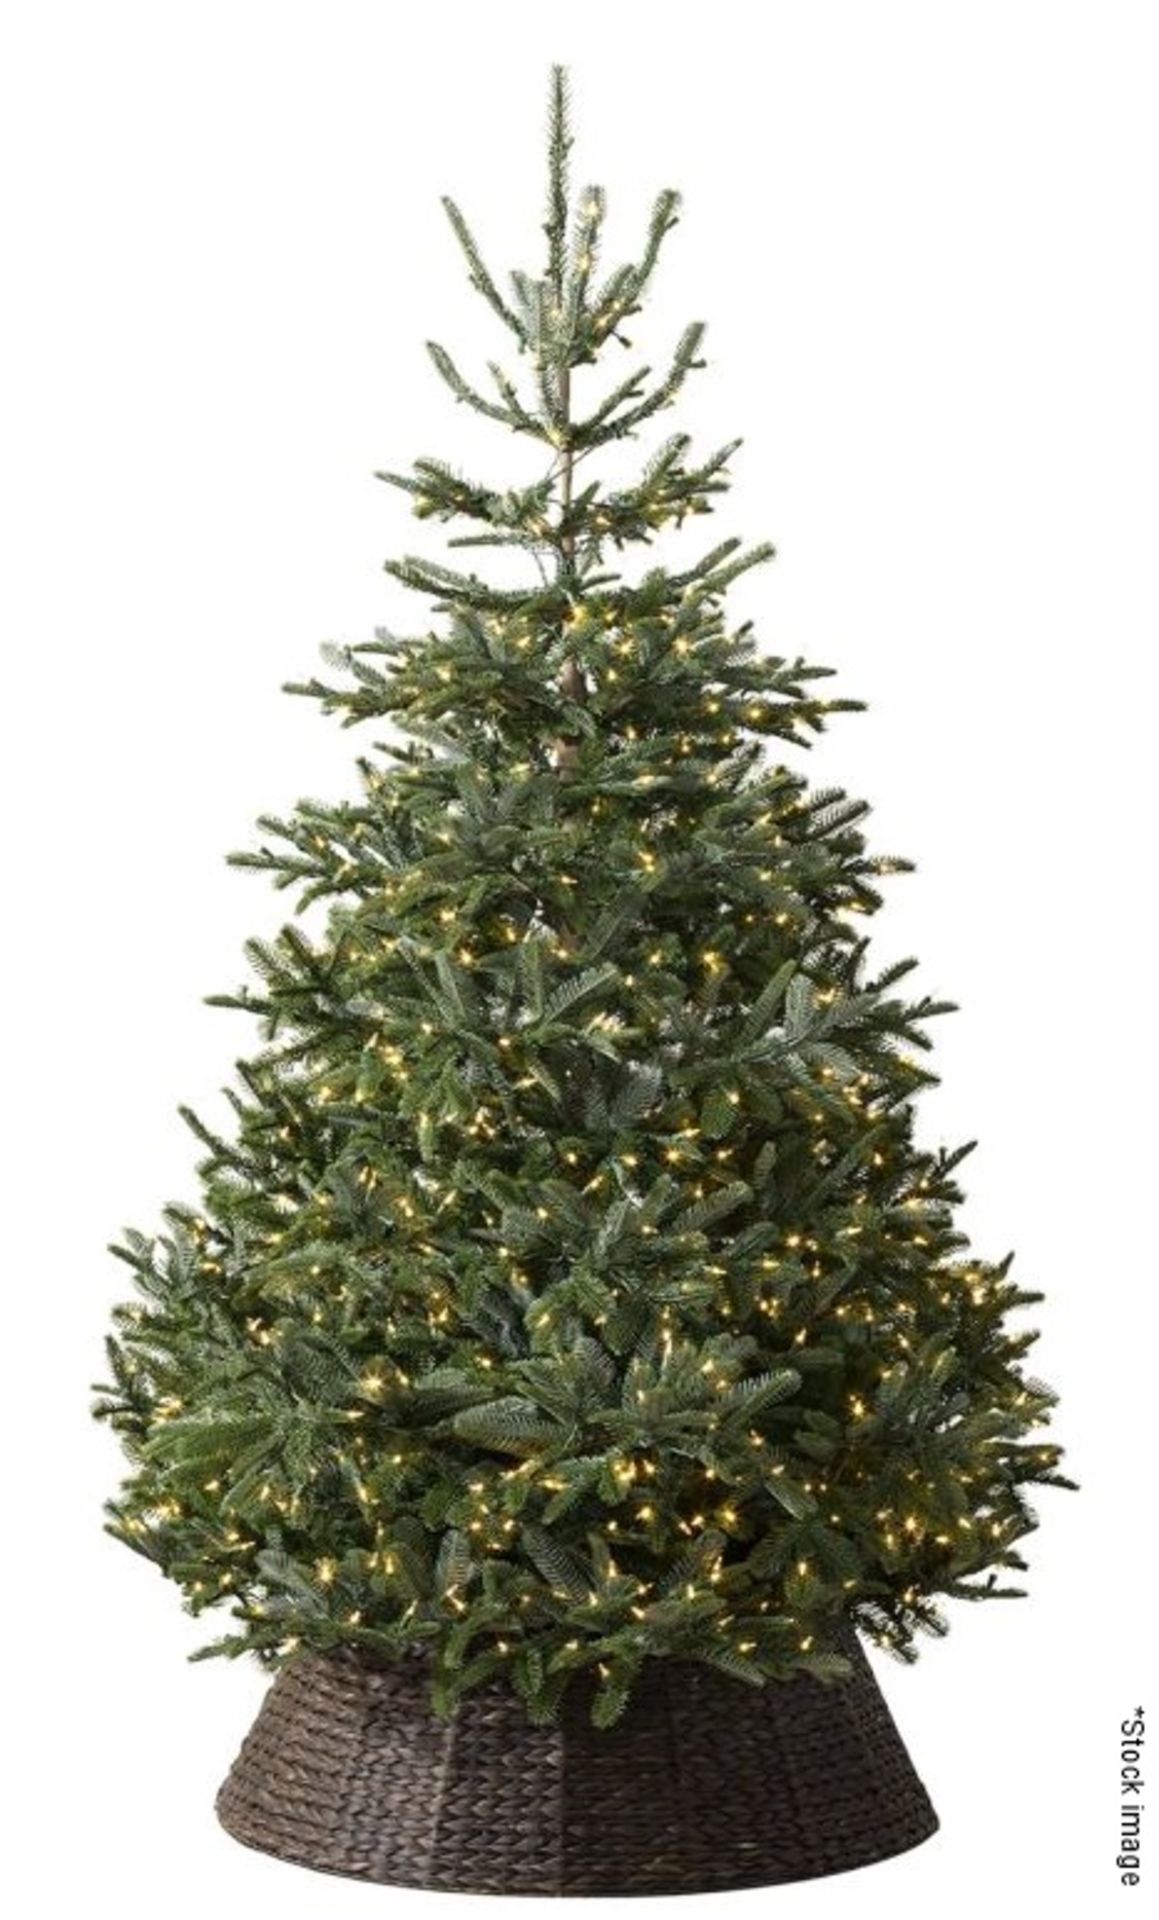 1 x BALSAM HILL 'Nordmann Fir' Luxury 12ft Candlelight Christmas Tree - Original Price £2,700 - Image 4 of 21